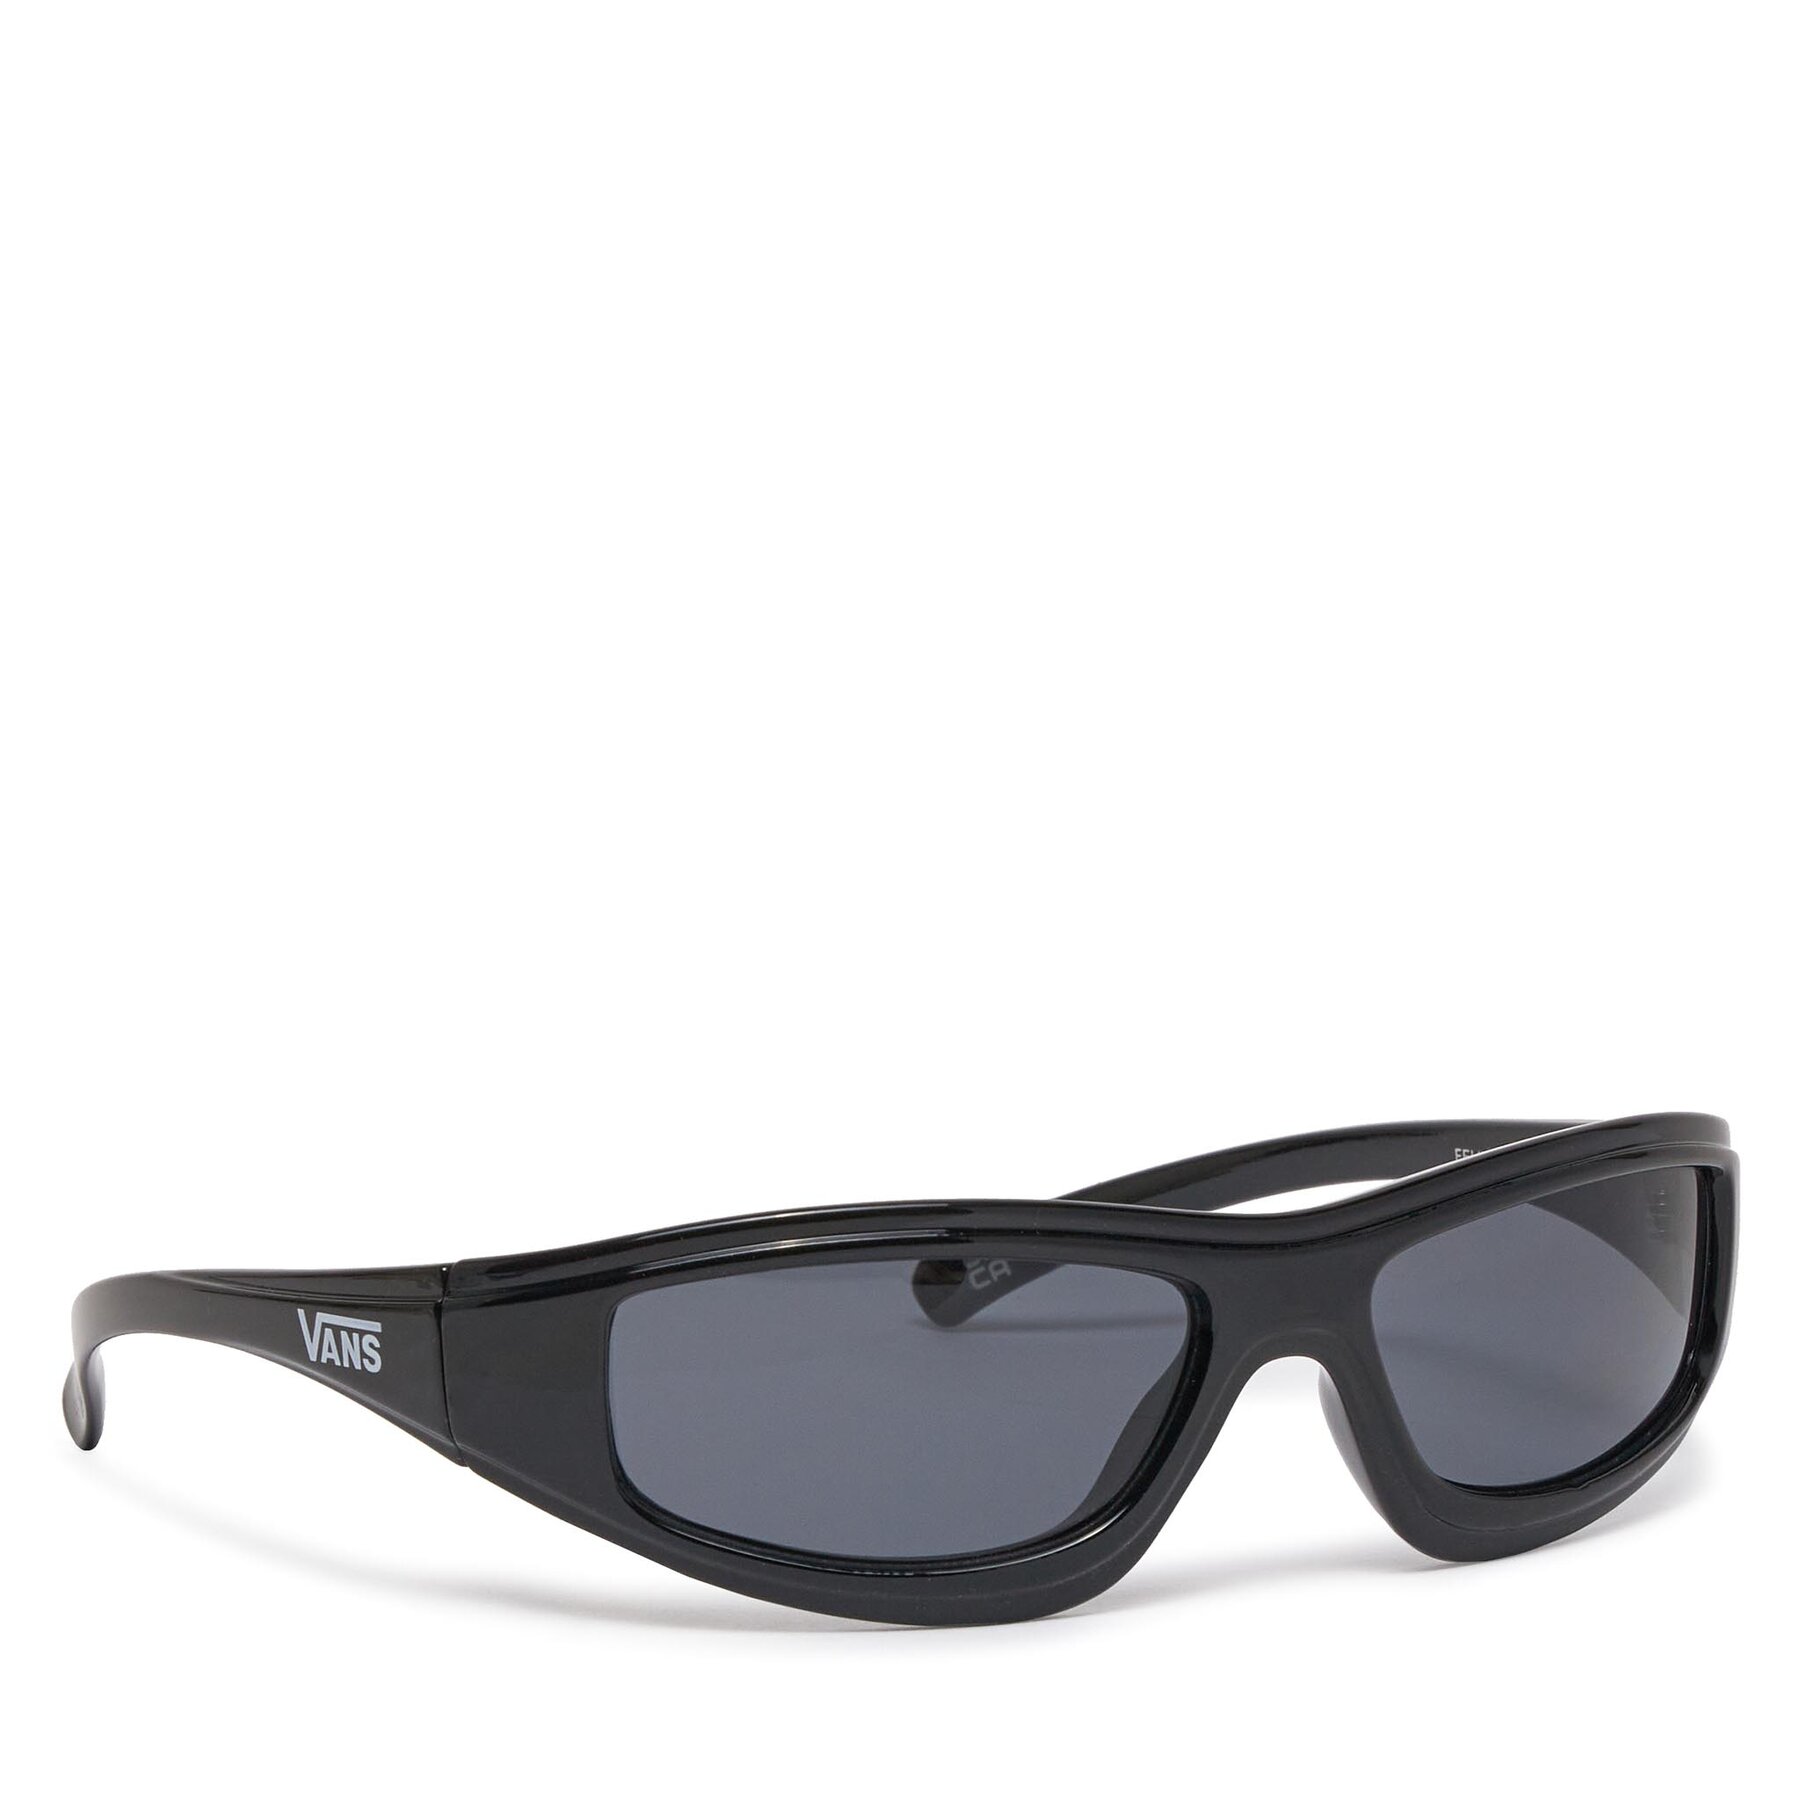 Sonnenbrillen Vans Felix Sunglasses VN000GMZBLK1 Black von Vans